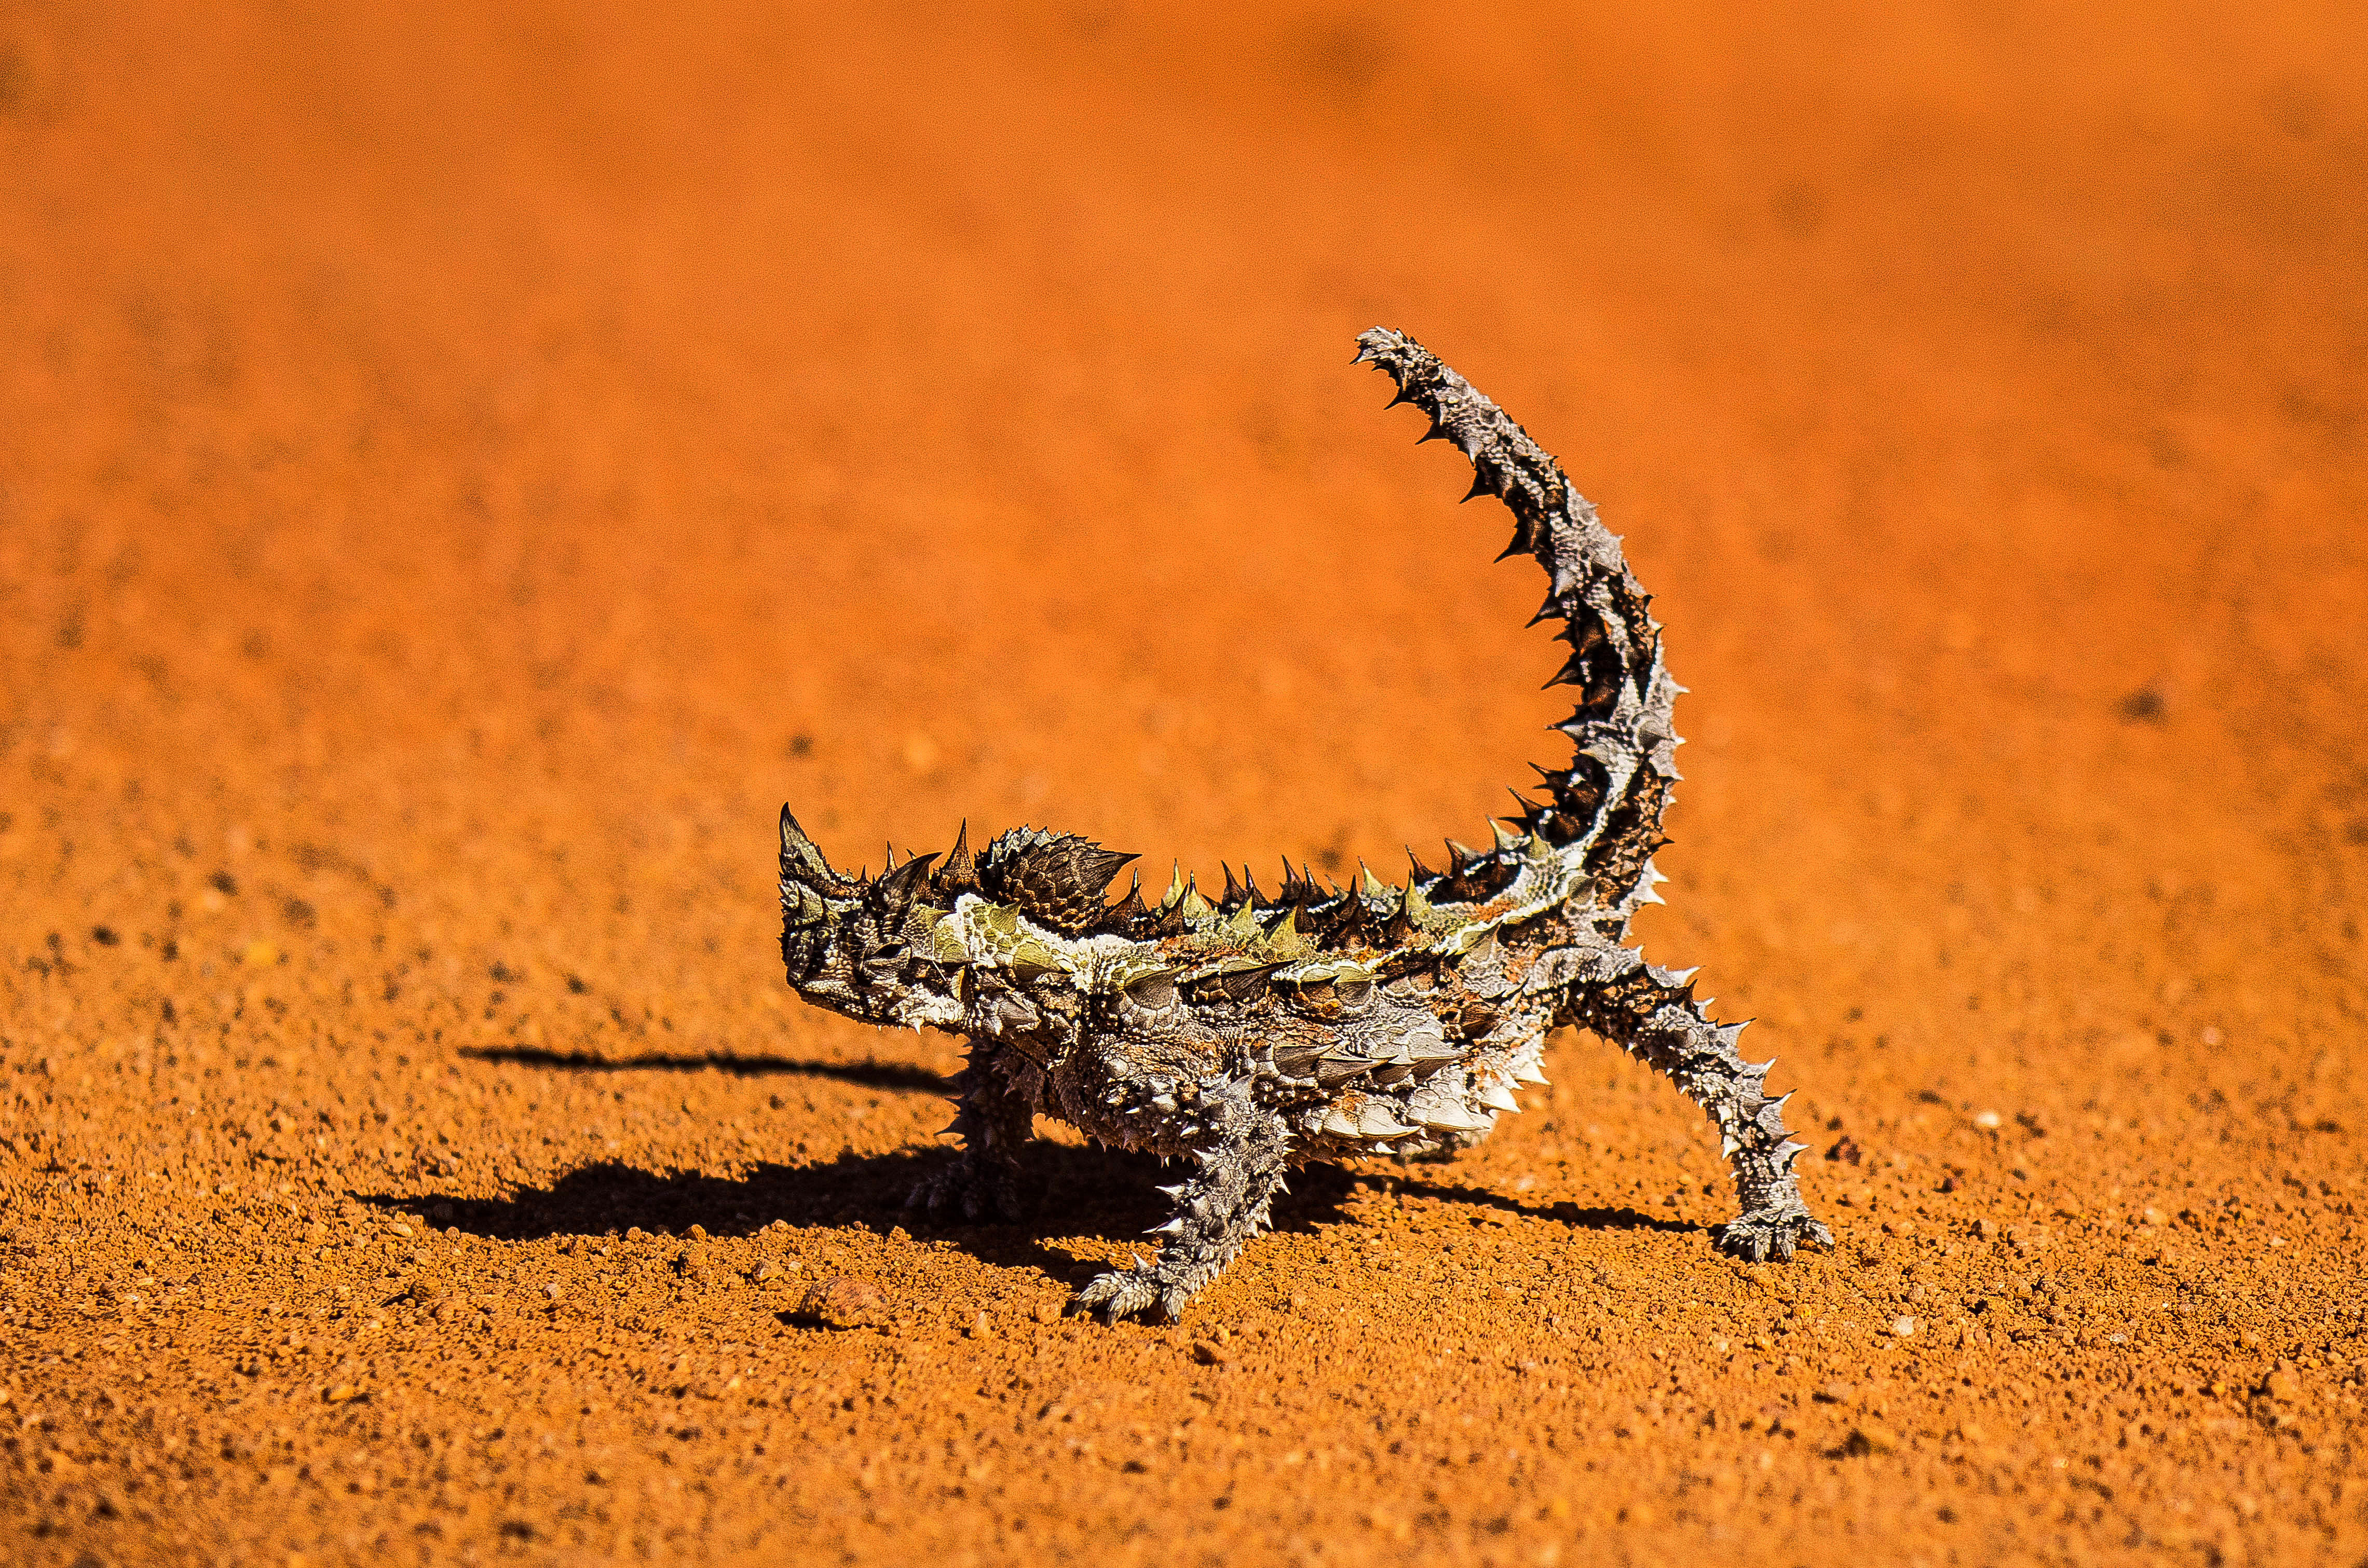 Lizard in Australia